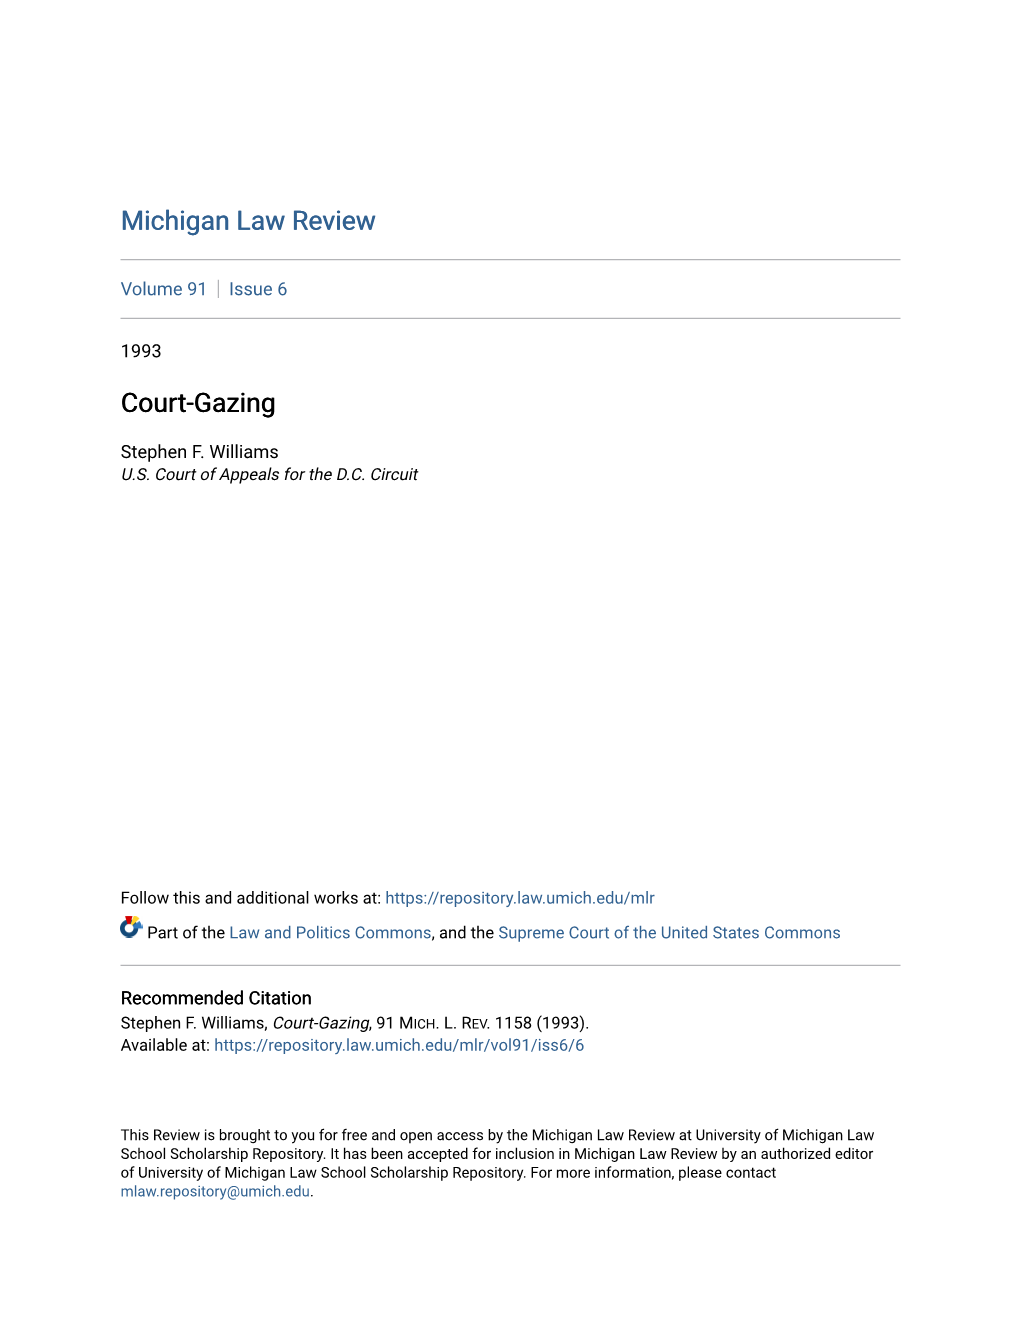 Michigan Law Review Court-Gazing